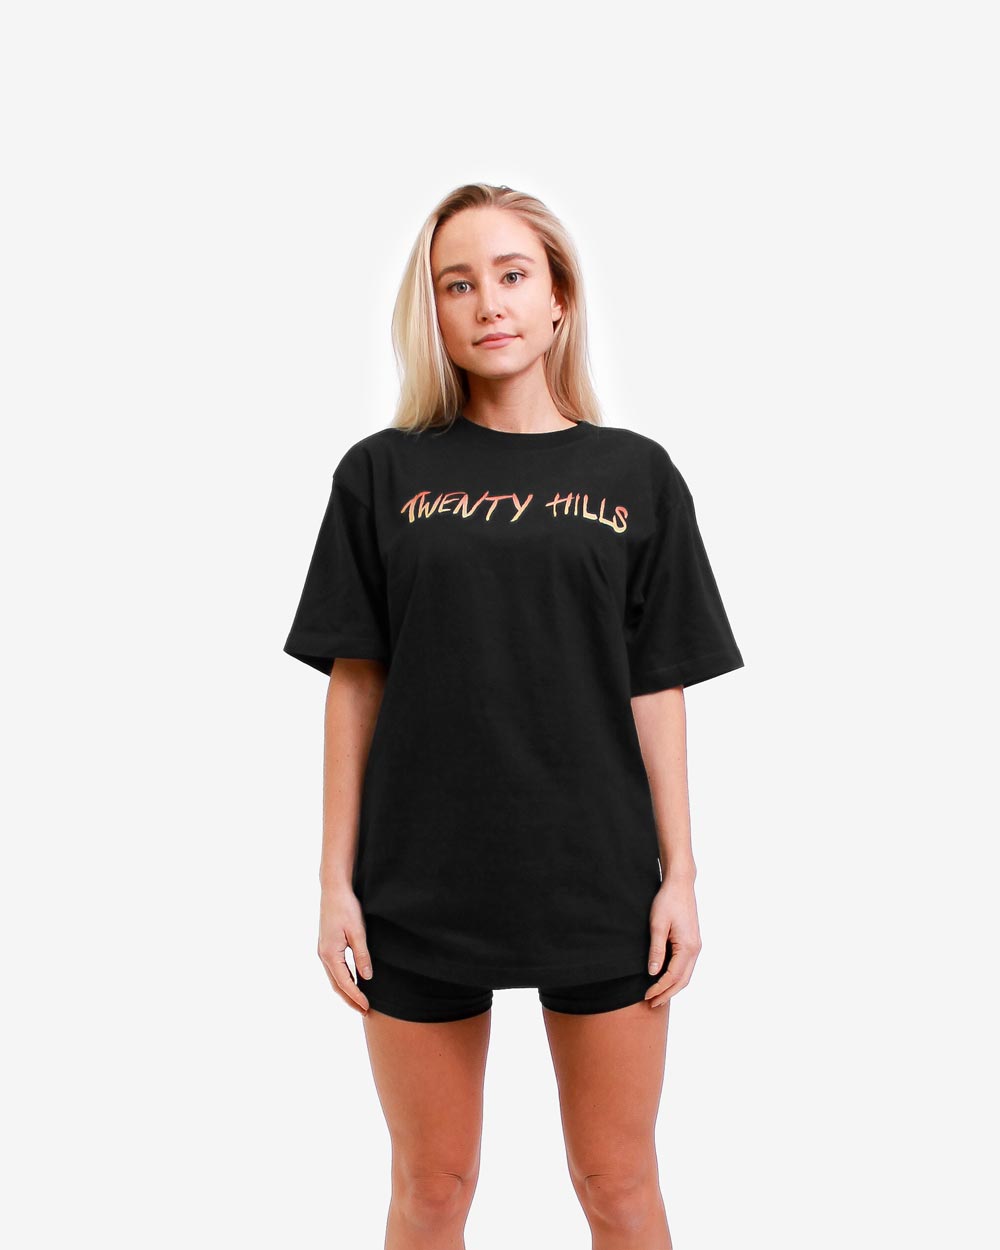 Classics (Twenty Hills) T-Shirt